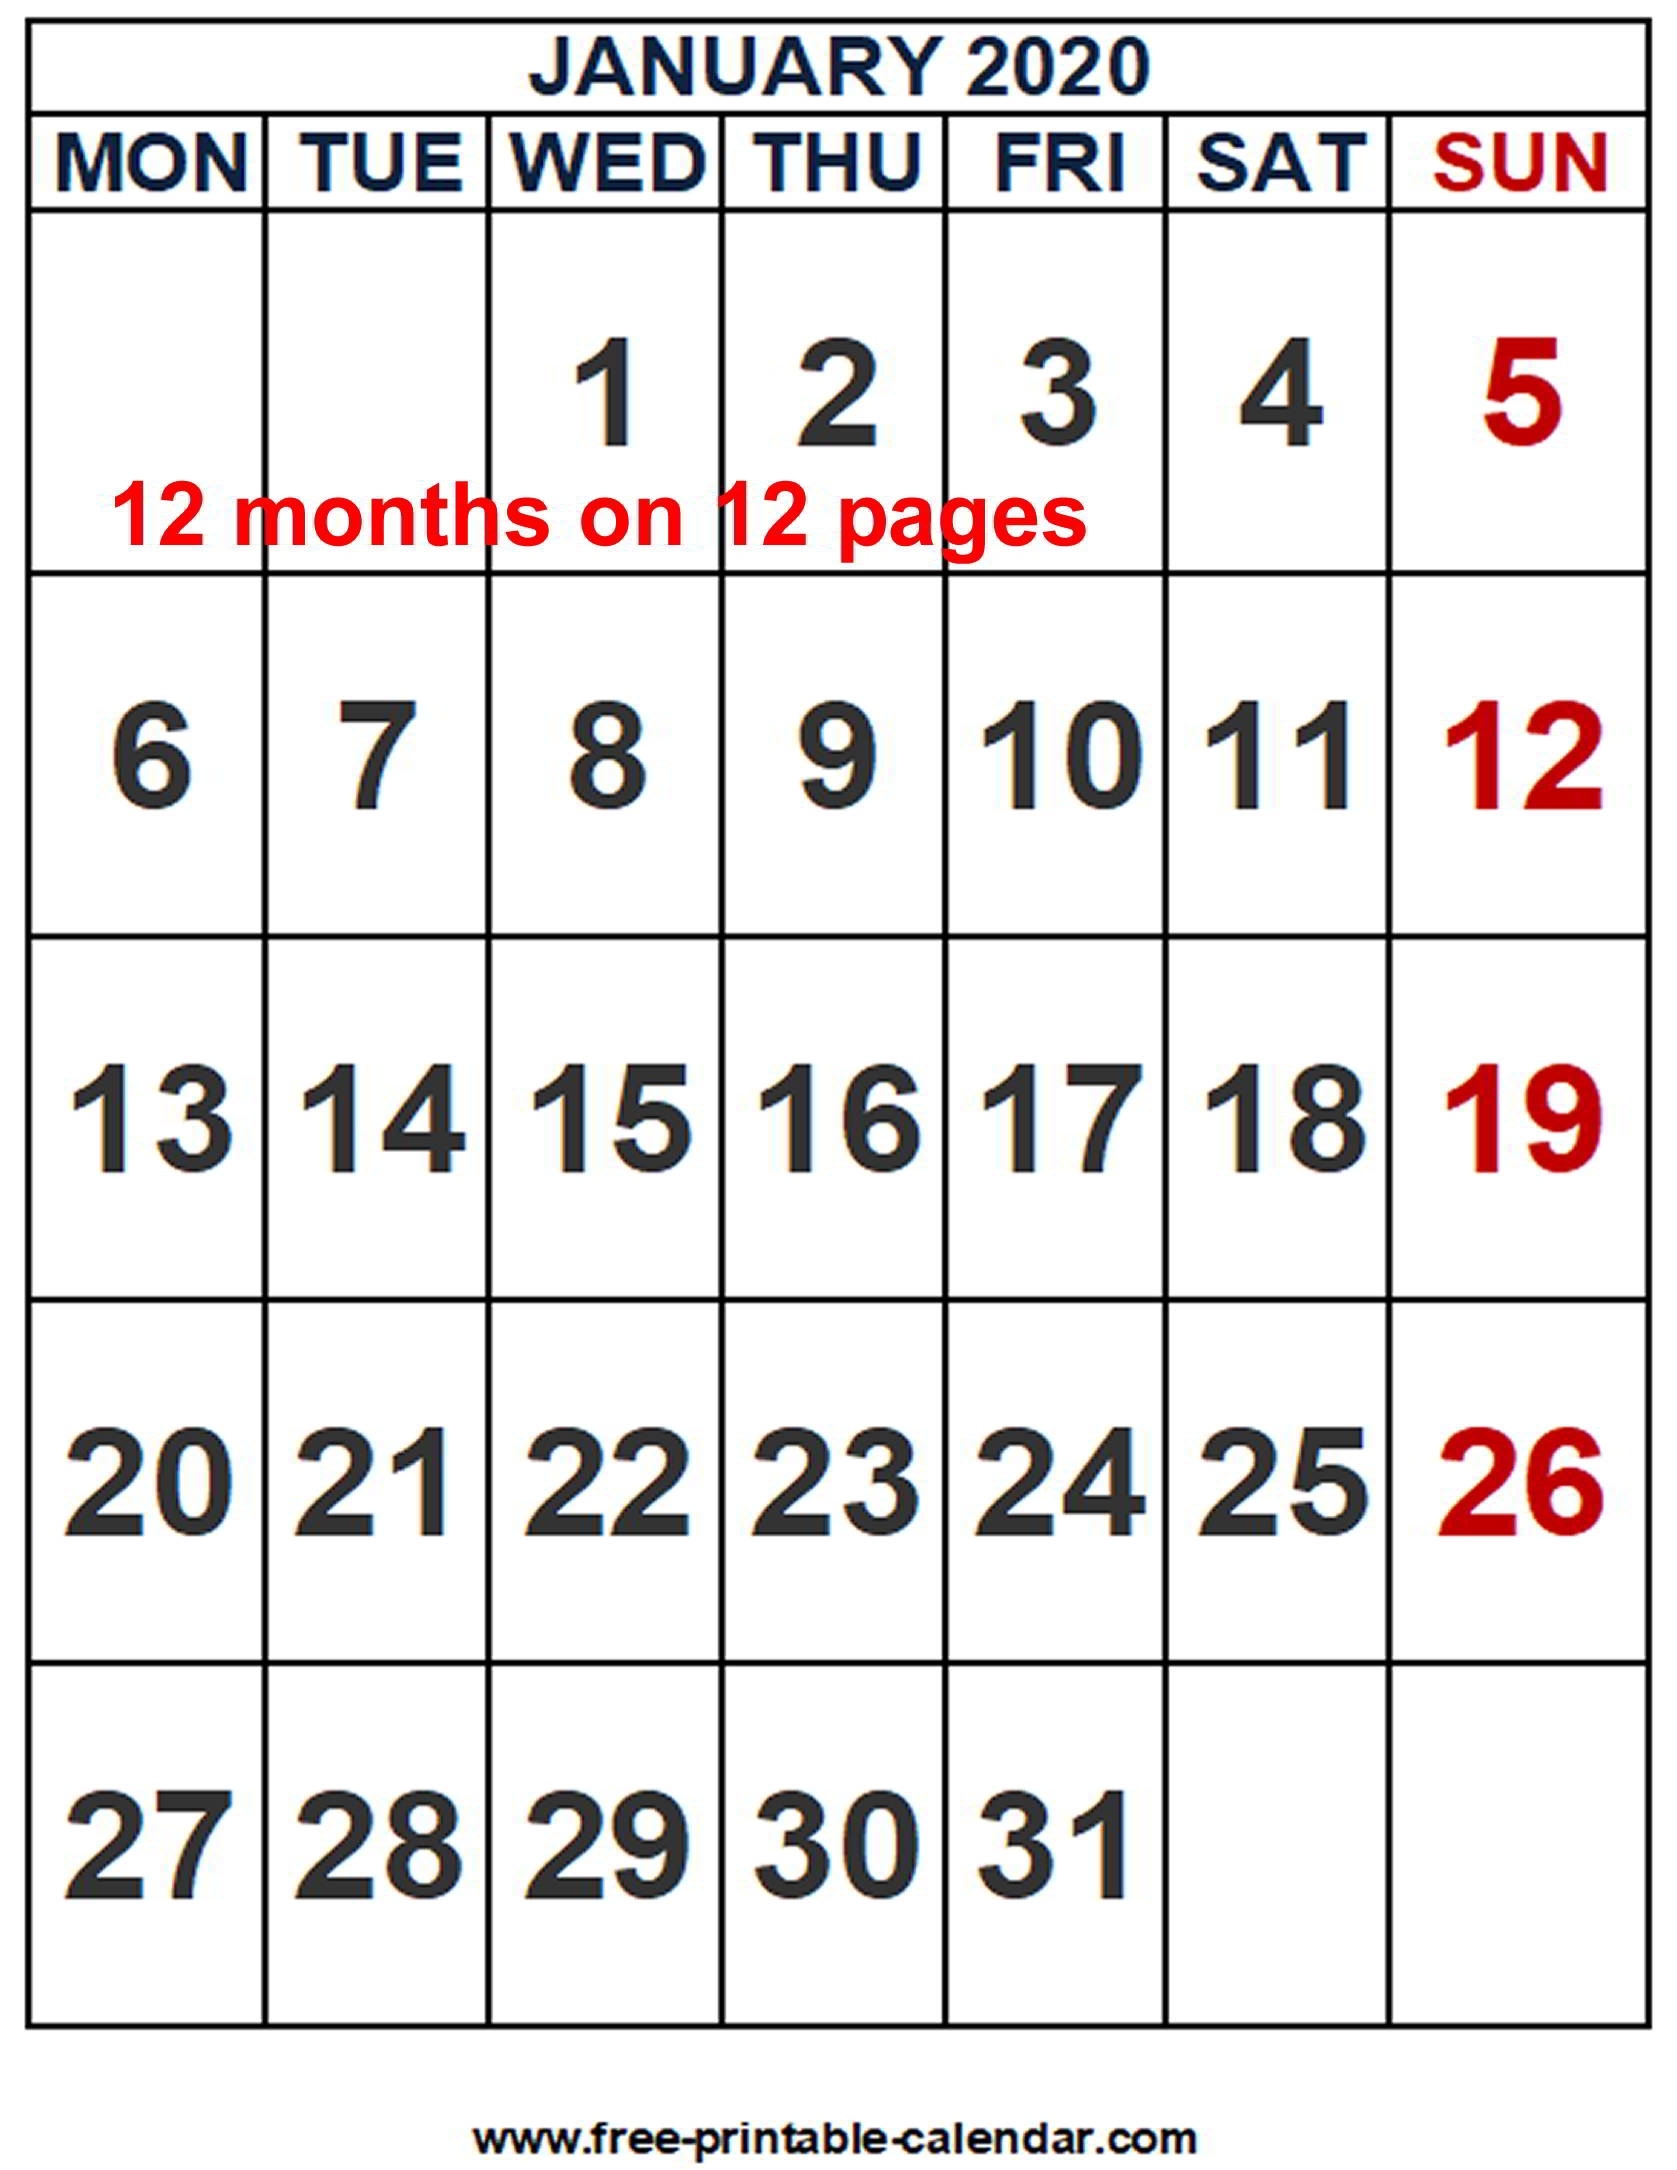 2020 Calendar Word Template - Free-Printable-Calendar Remarkable Printable Calendar In Word Format